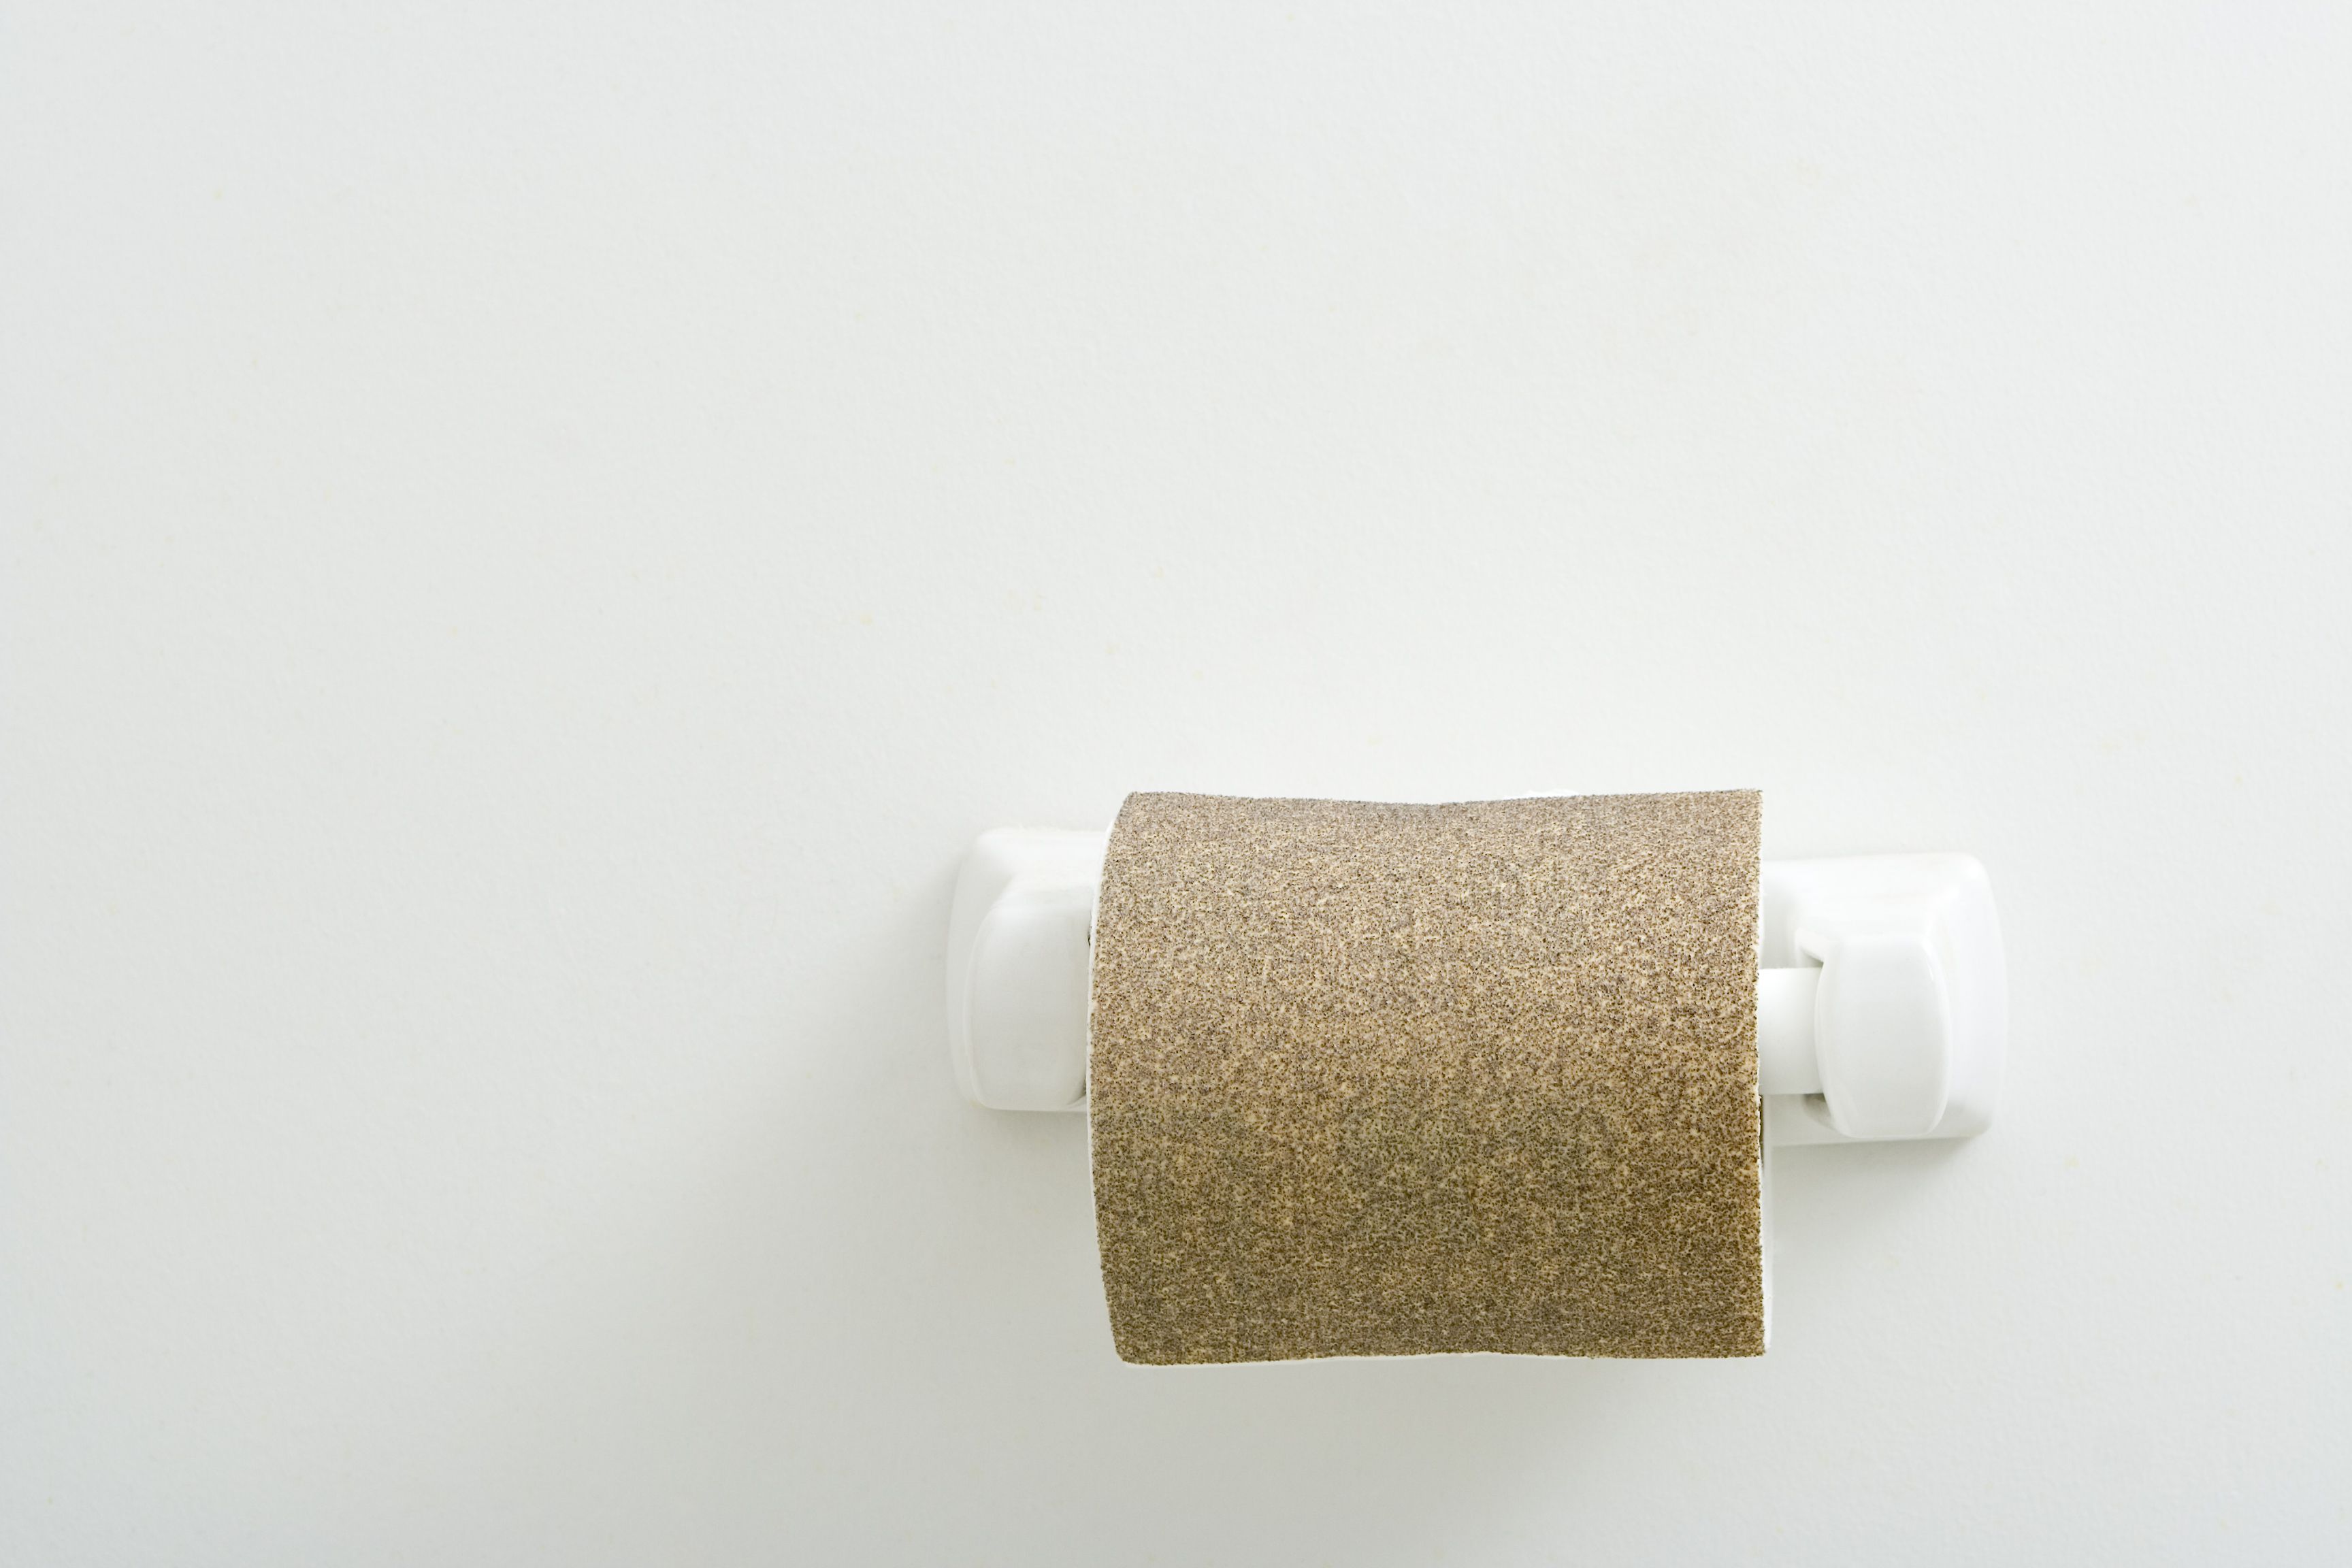 prolapsed hemorrhoids hemorrhoid anal treatment hurt does symptoms causes toilet paper